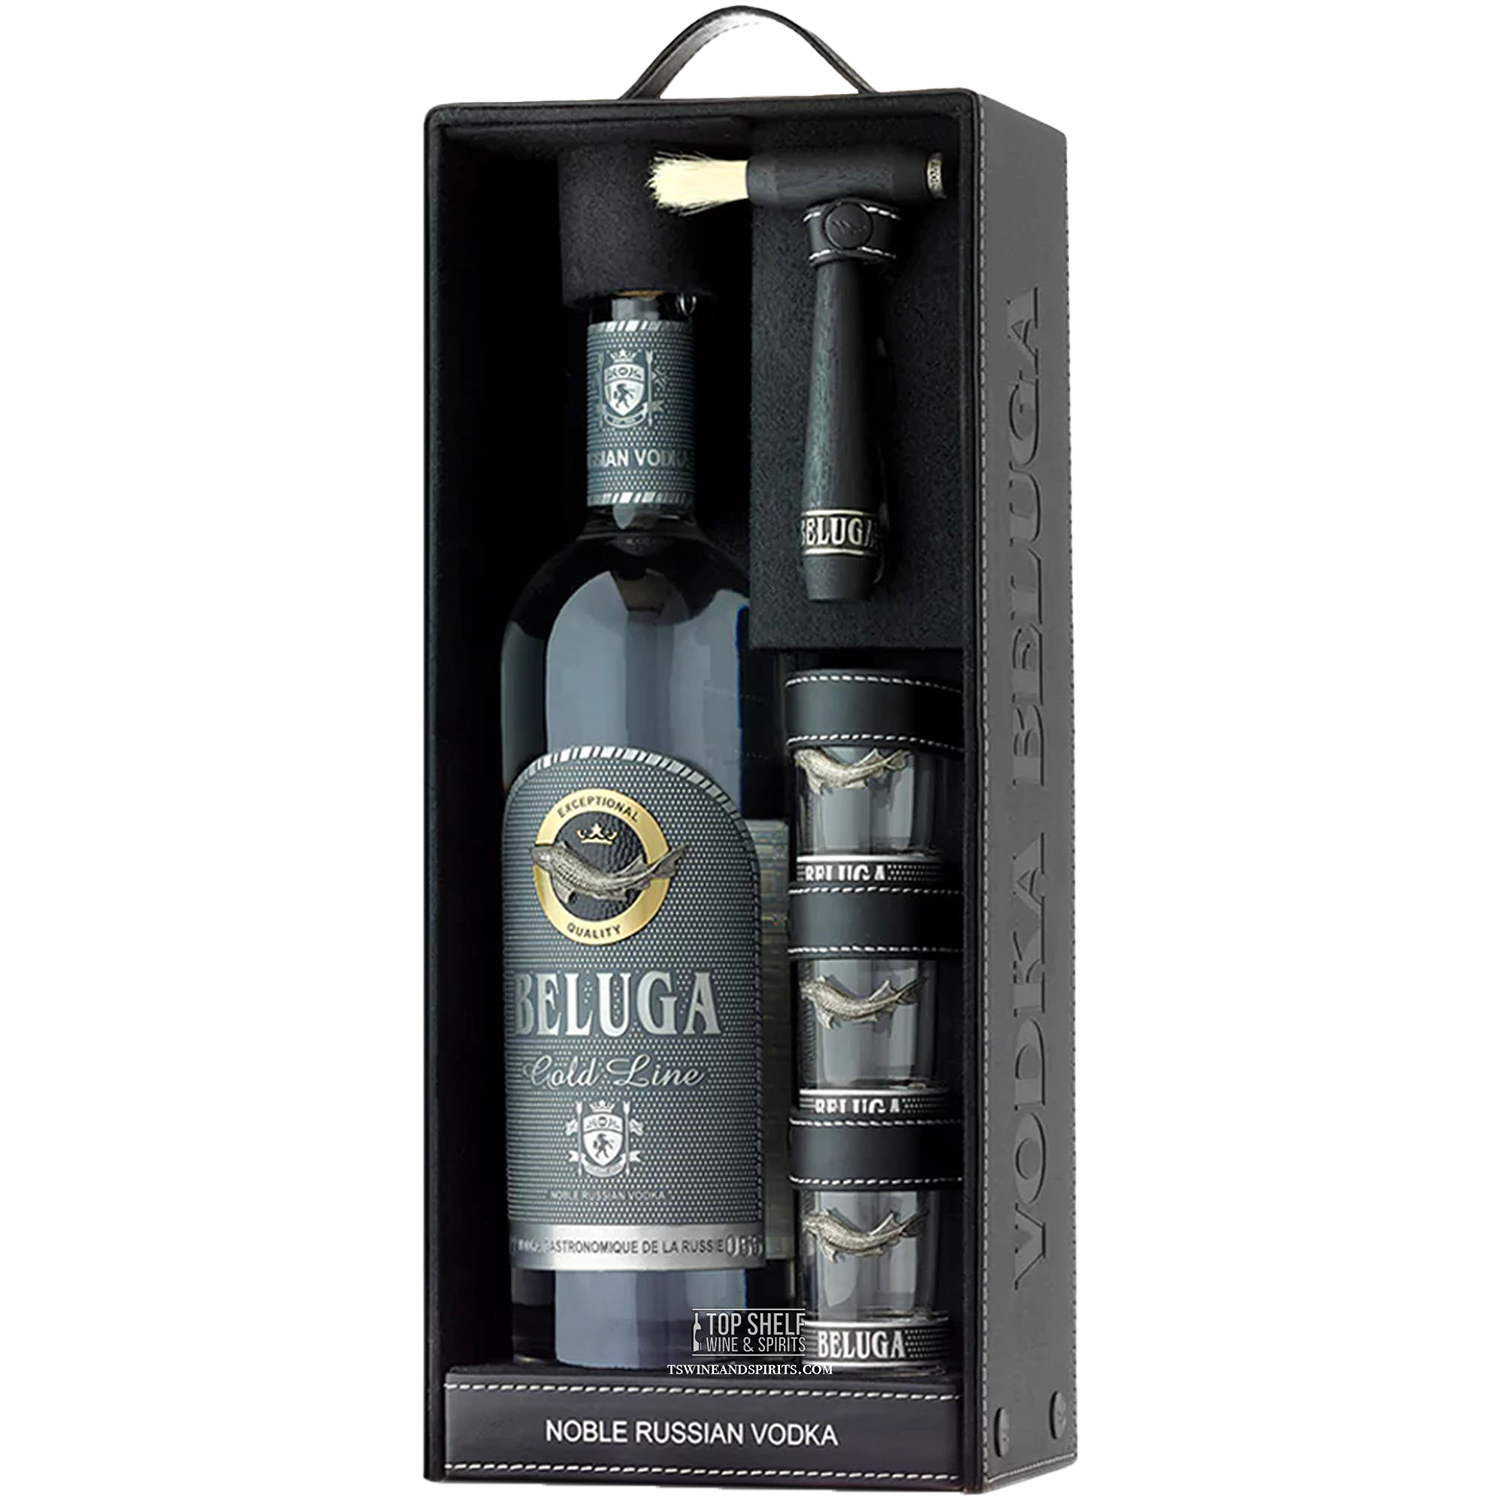 Beluga Gold Line Russian Vodka gift set with 3 shot glasses